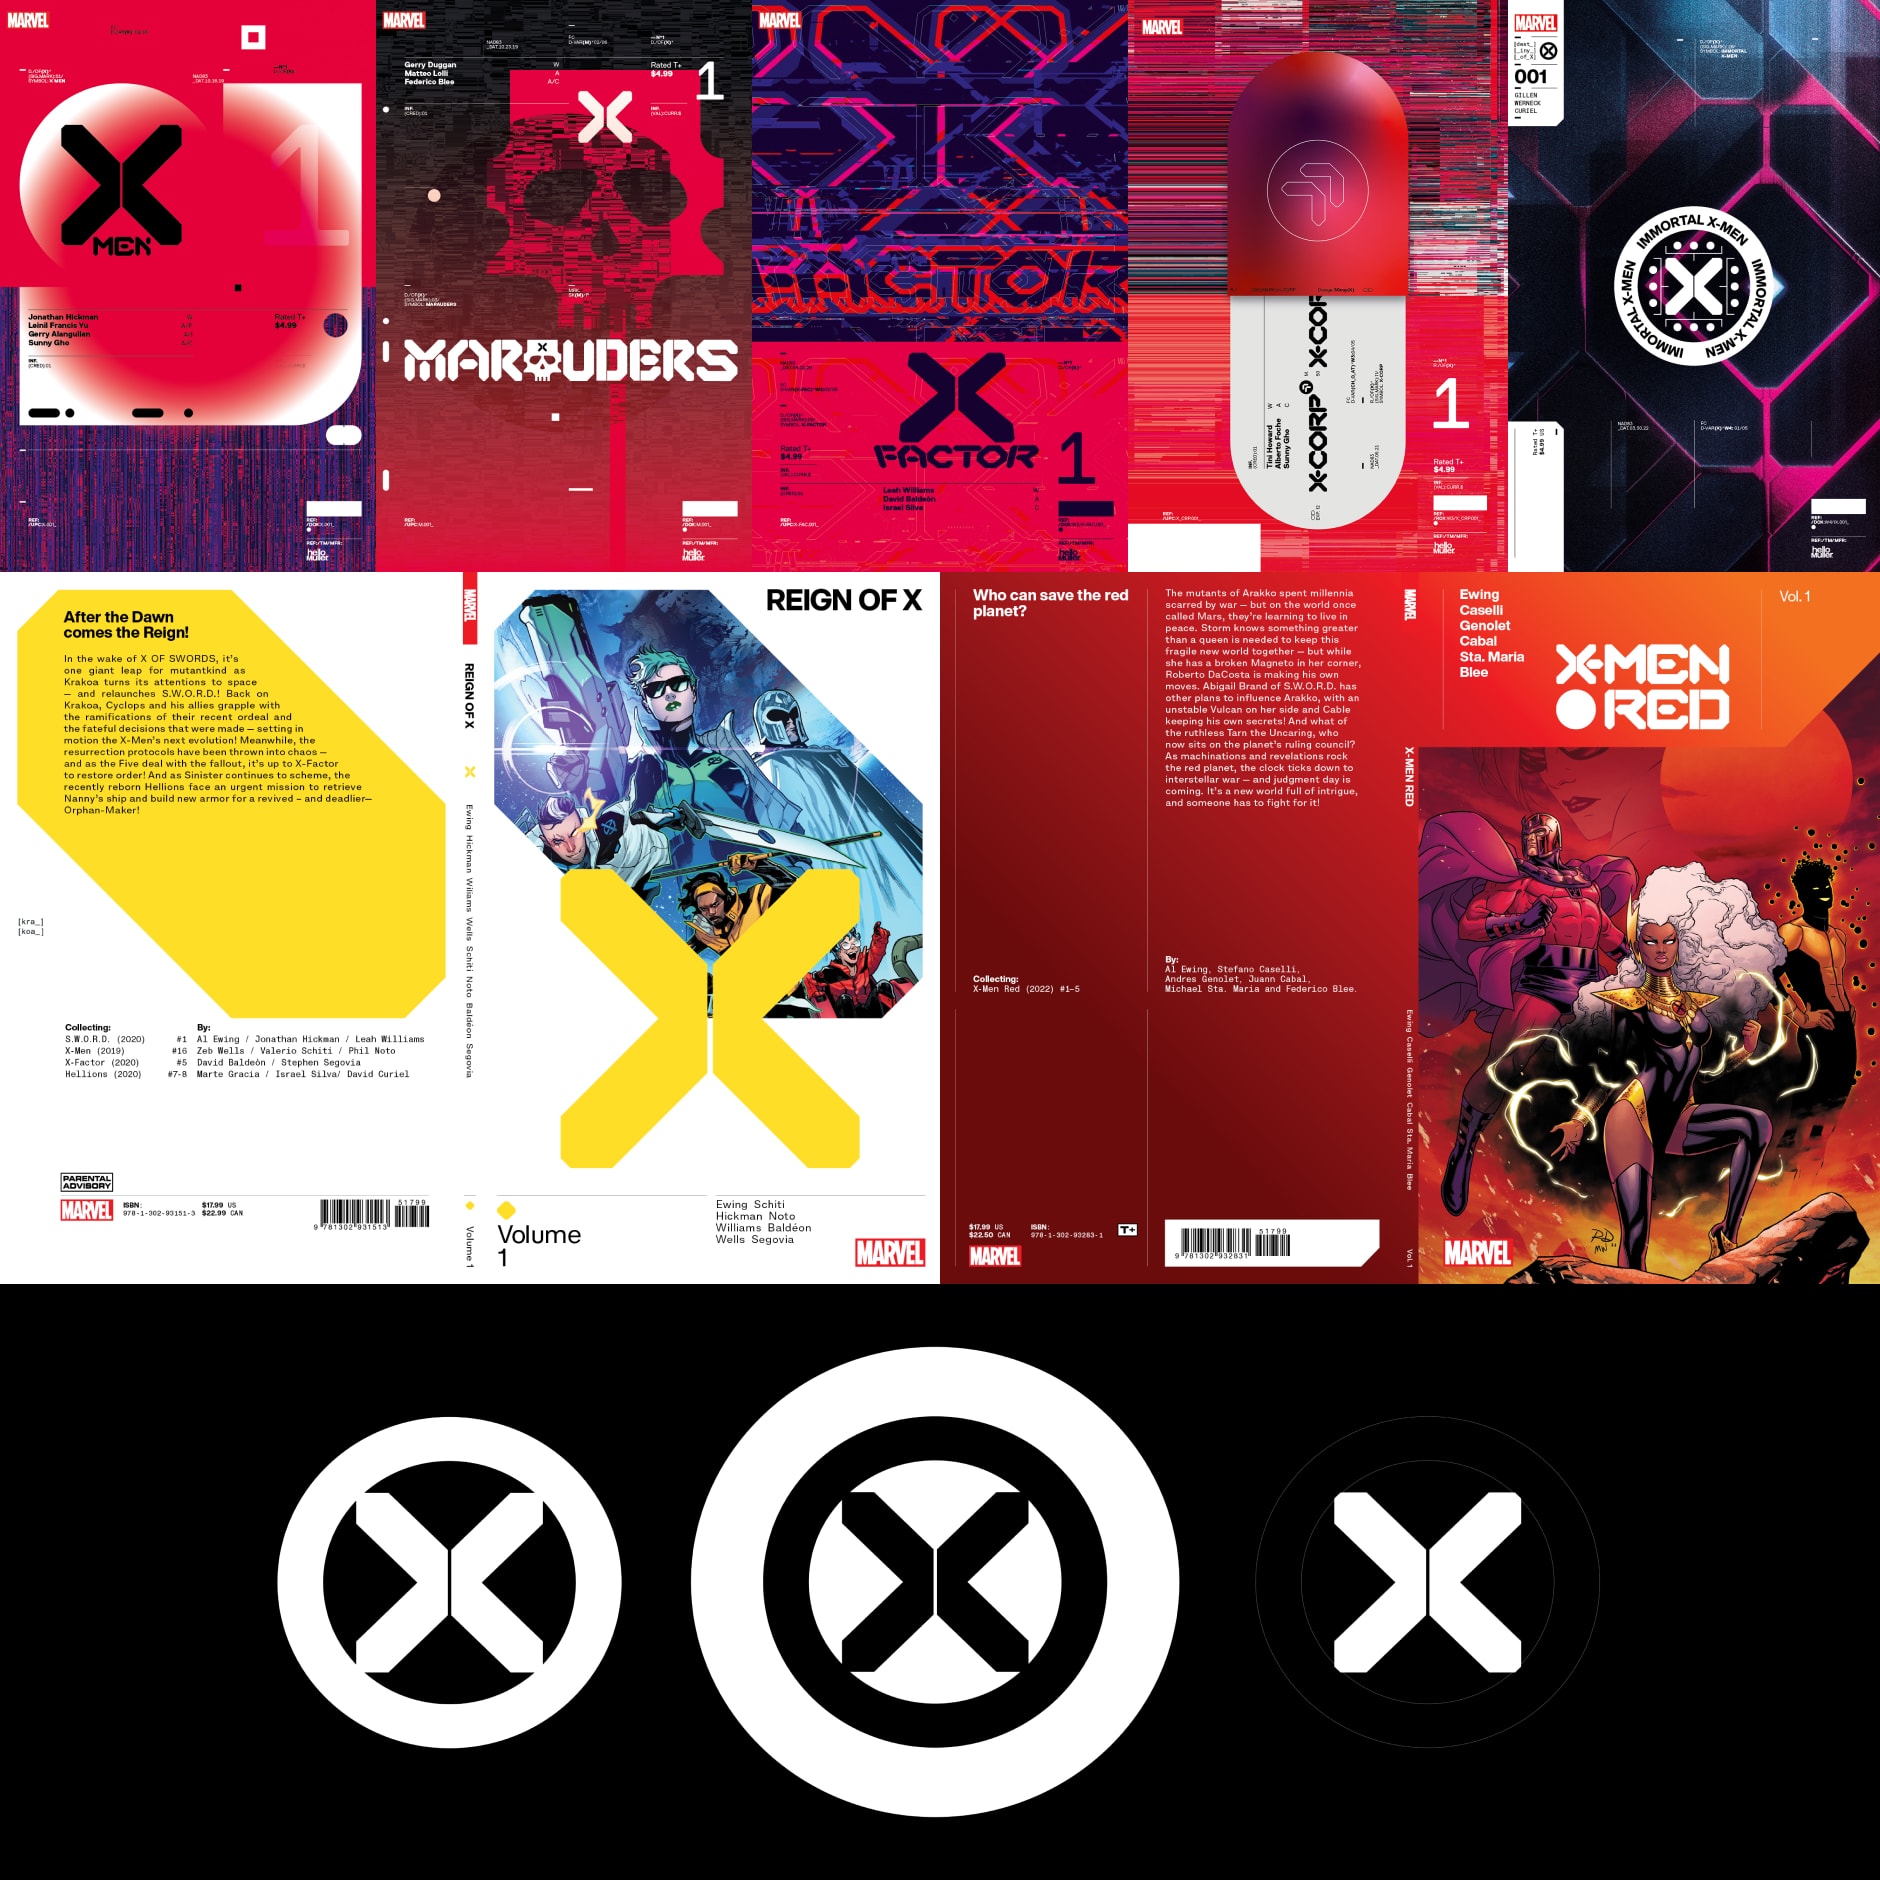 X-Men comics logos and covers